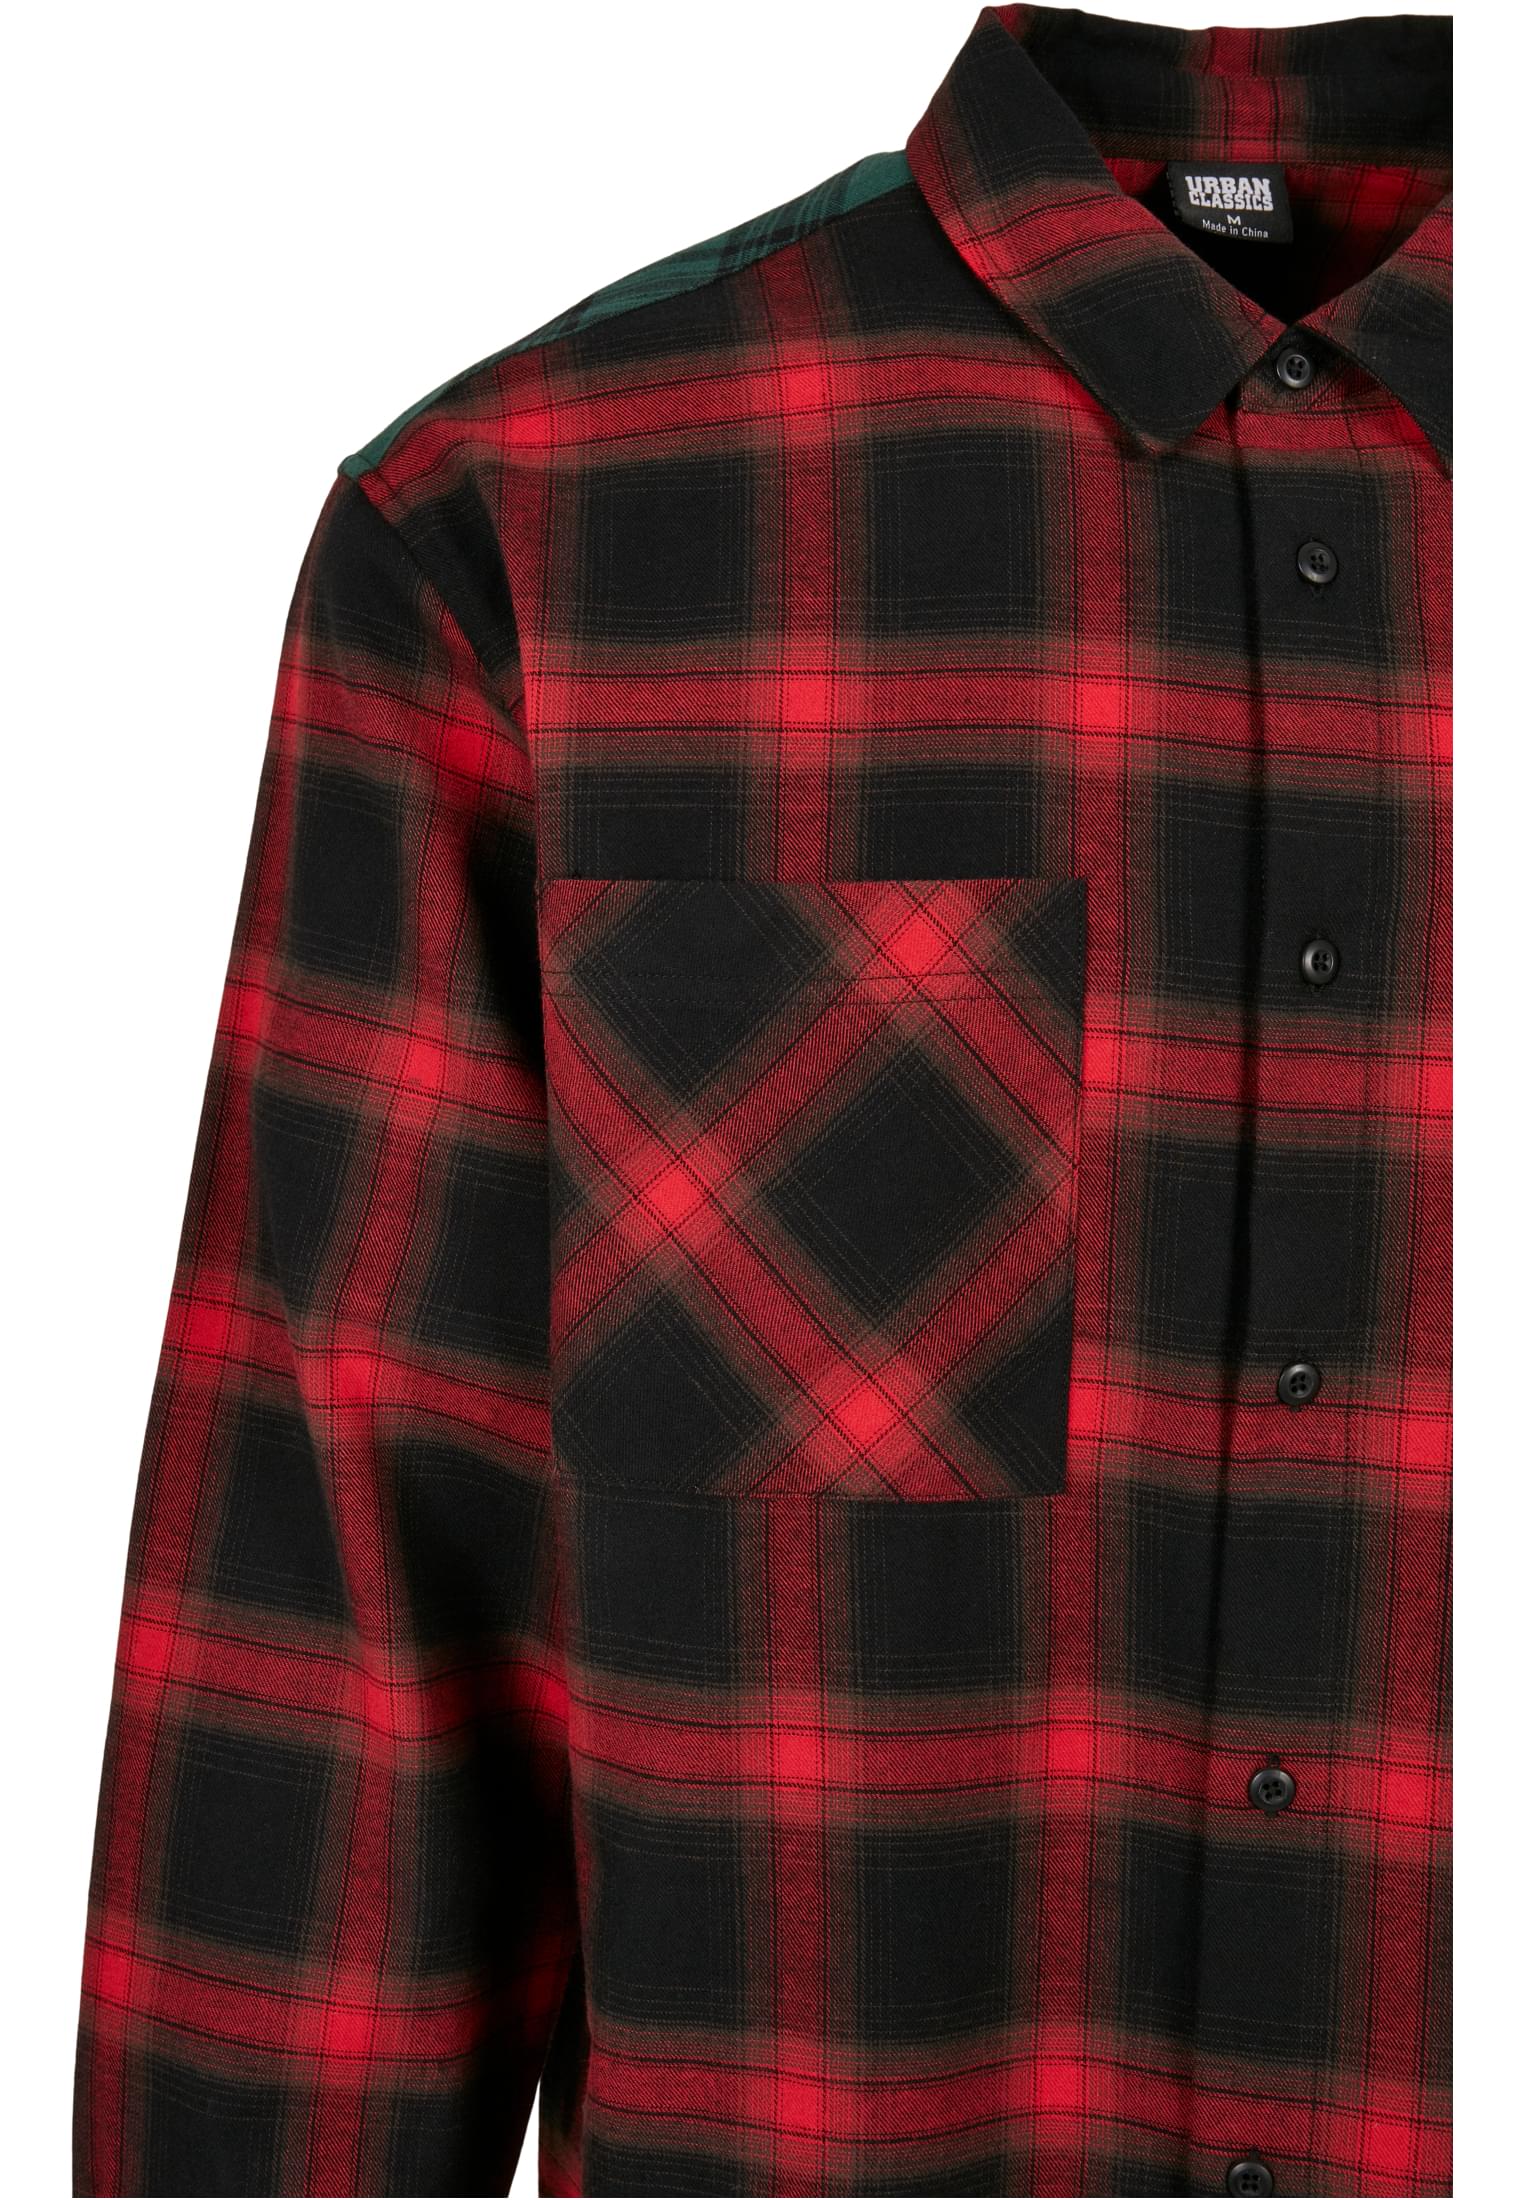 Hemden Oversized Mix Check Shirt in Farbe black/red/green